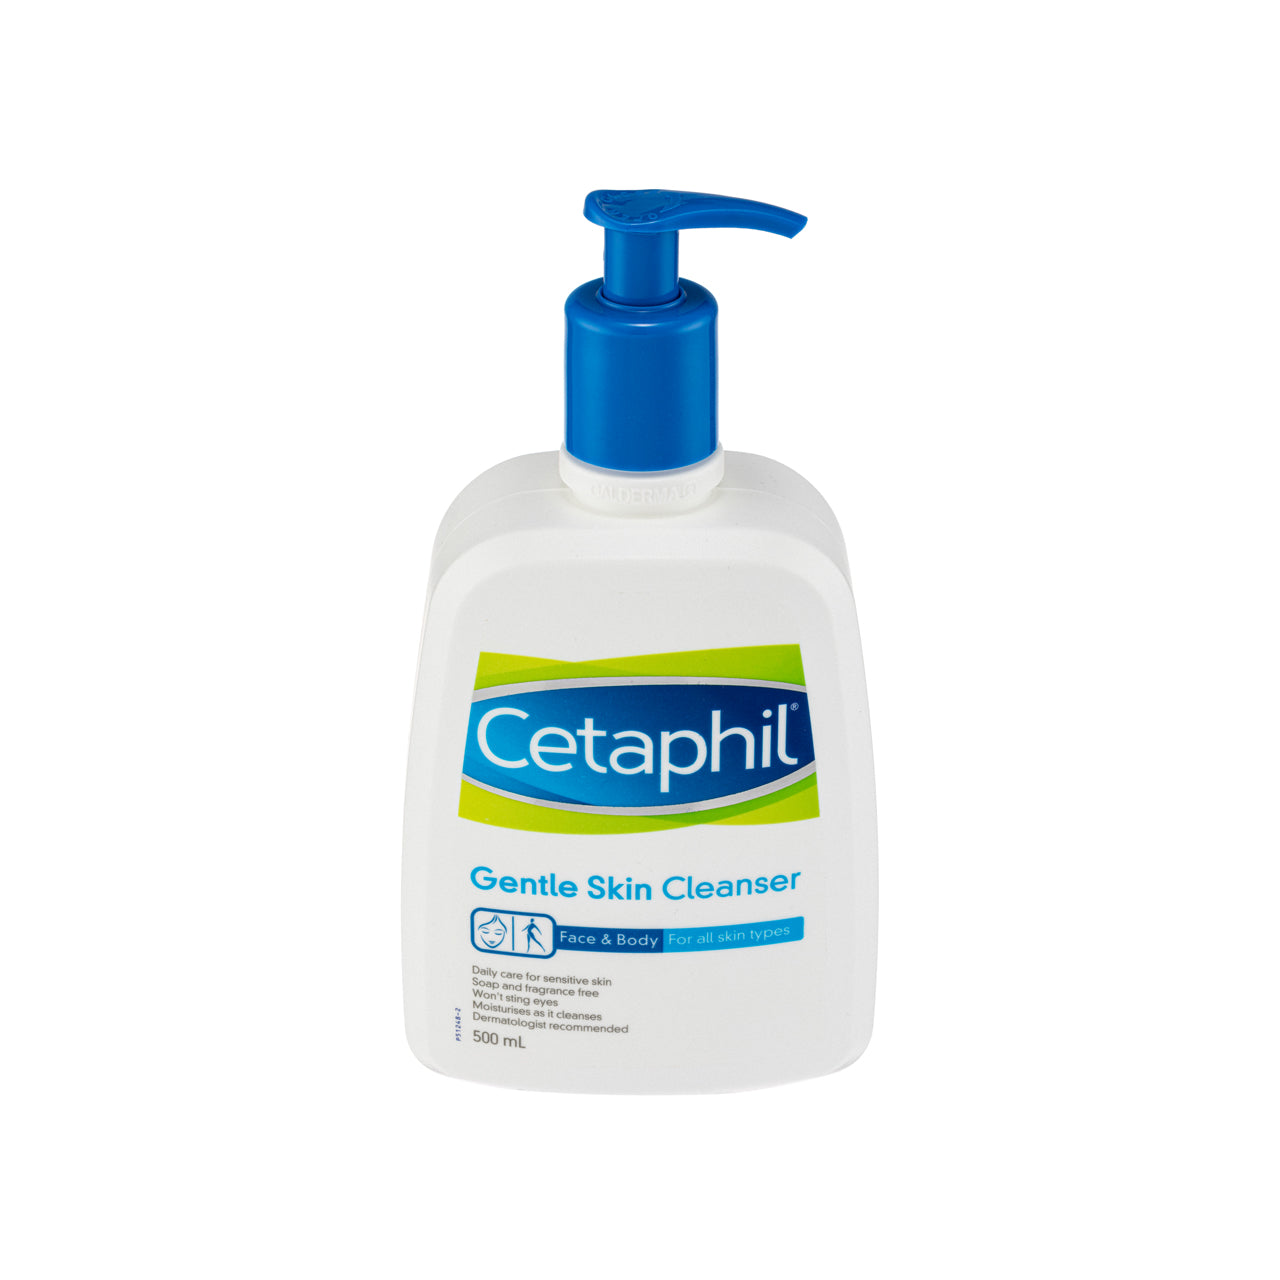 Cetaphil 舒特肤温和洁肤露 29毫升